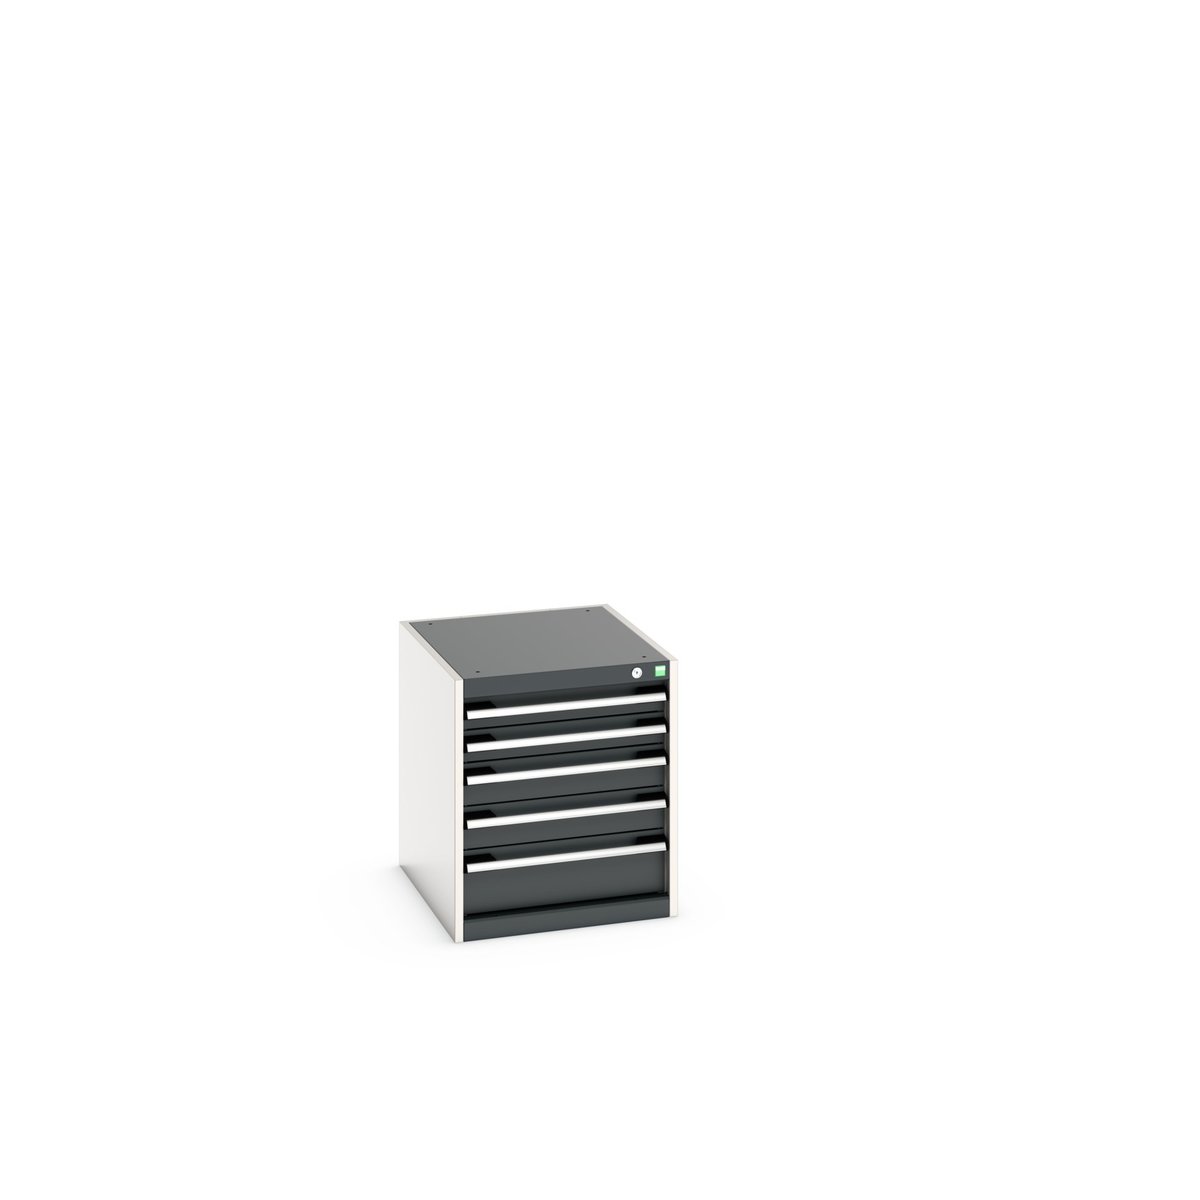 40018131. - cubio drawer cabinet